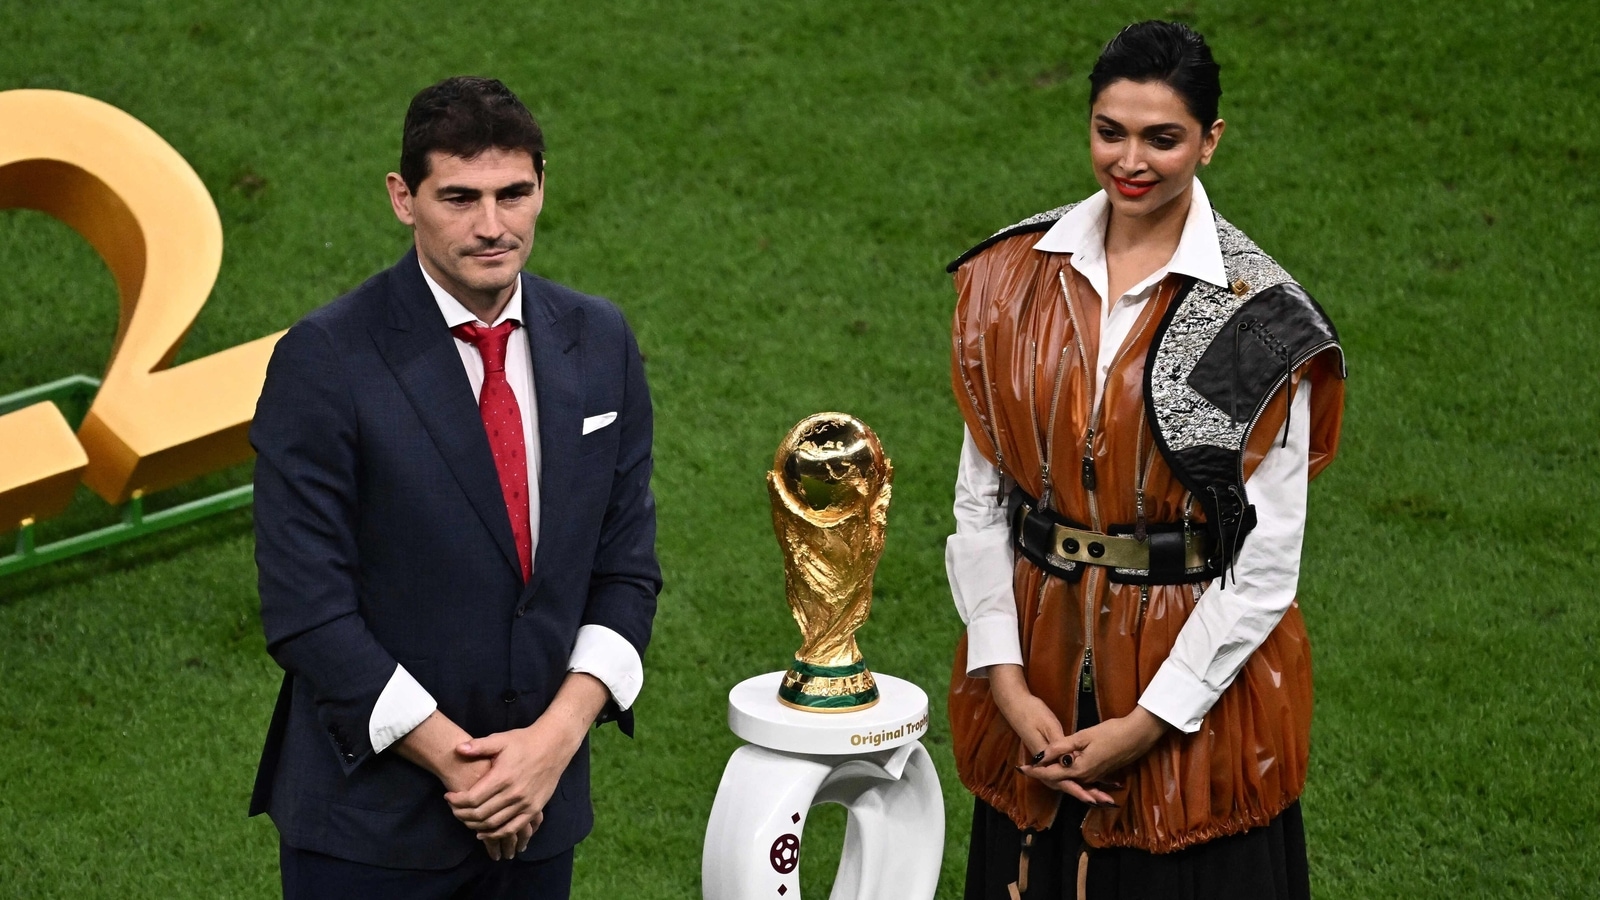 Deepika Padukone looked fashionable as she made history at the FIFA finals